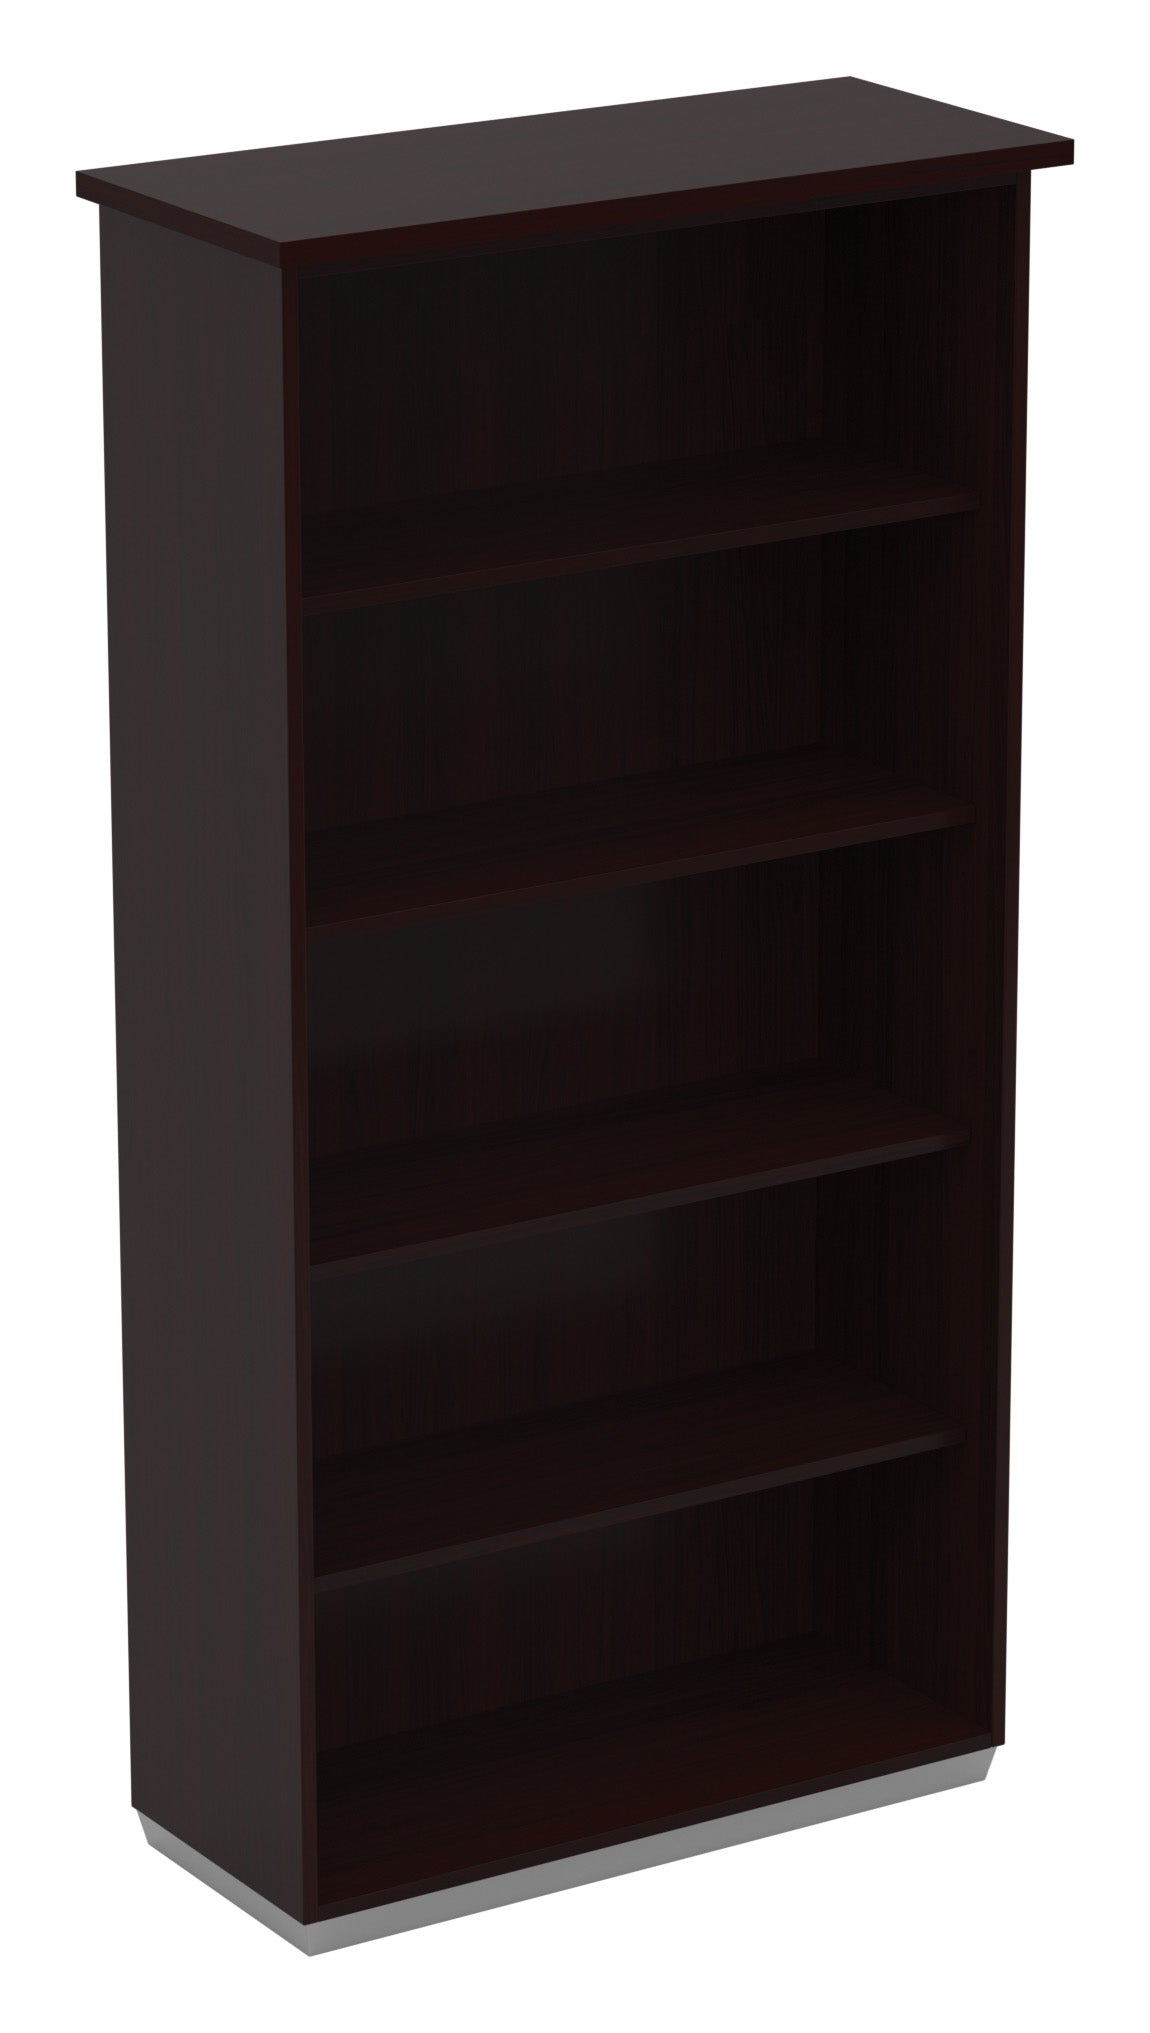 TUX-56 Tuxedo 5 Shelf Bookcase - 72"H by OSP